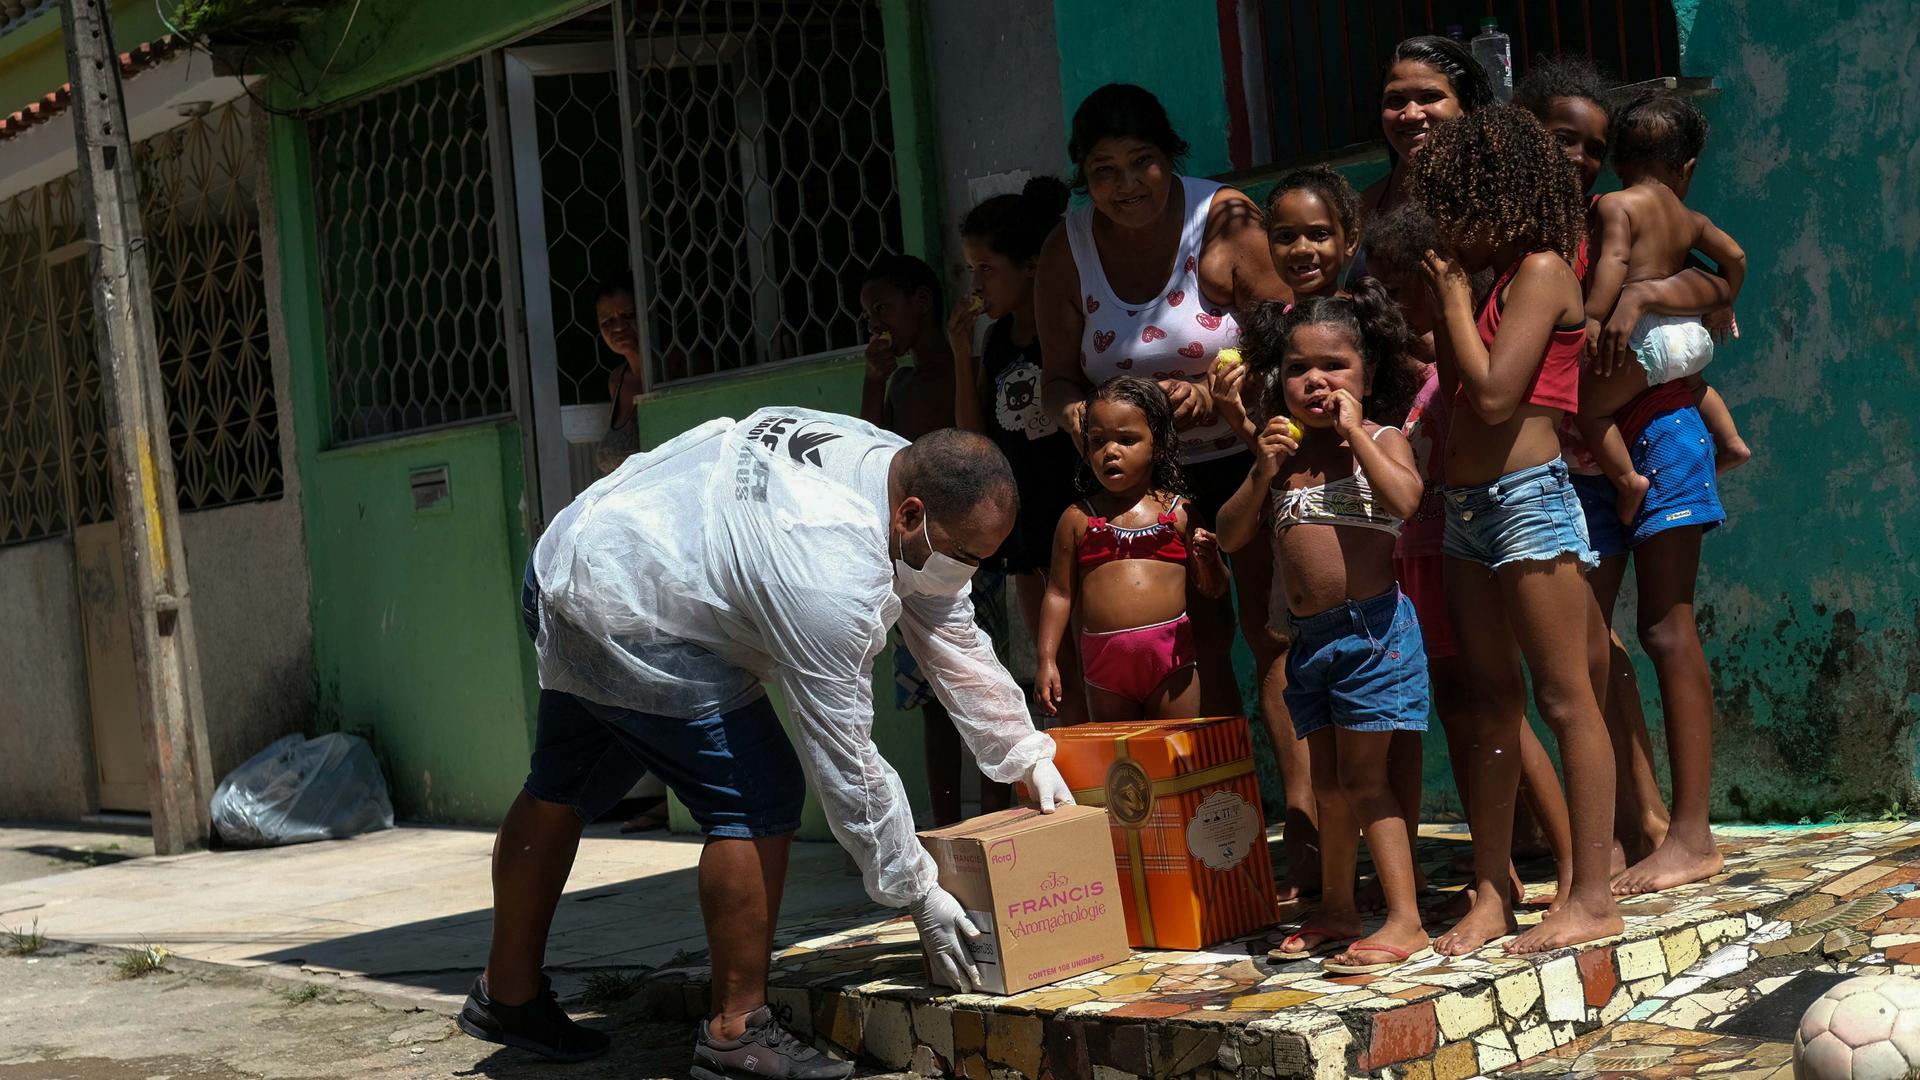 A volunteer delivers donated aid to poor families in Rio de Janeiro's slums through Single Centre of Slums (CUFA) during the coronavirus disease (COVID-19) outbreak, in Vila Kennedy slum in Rio de Janeiro, Brazil, on April 2, 2020.